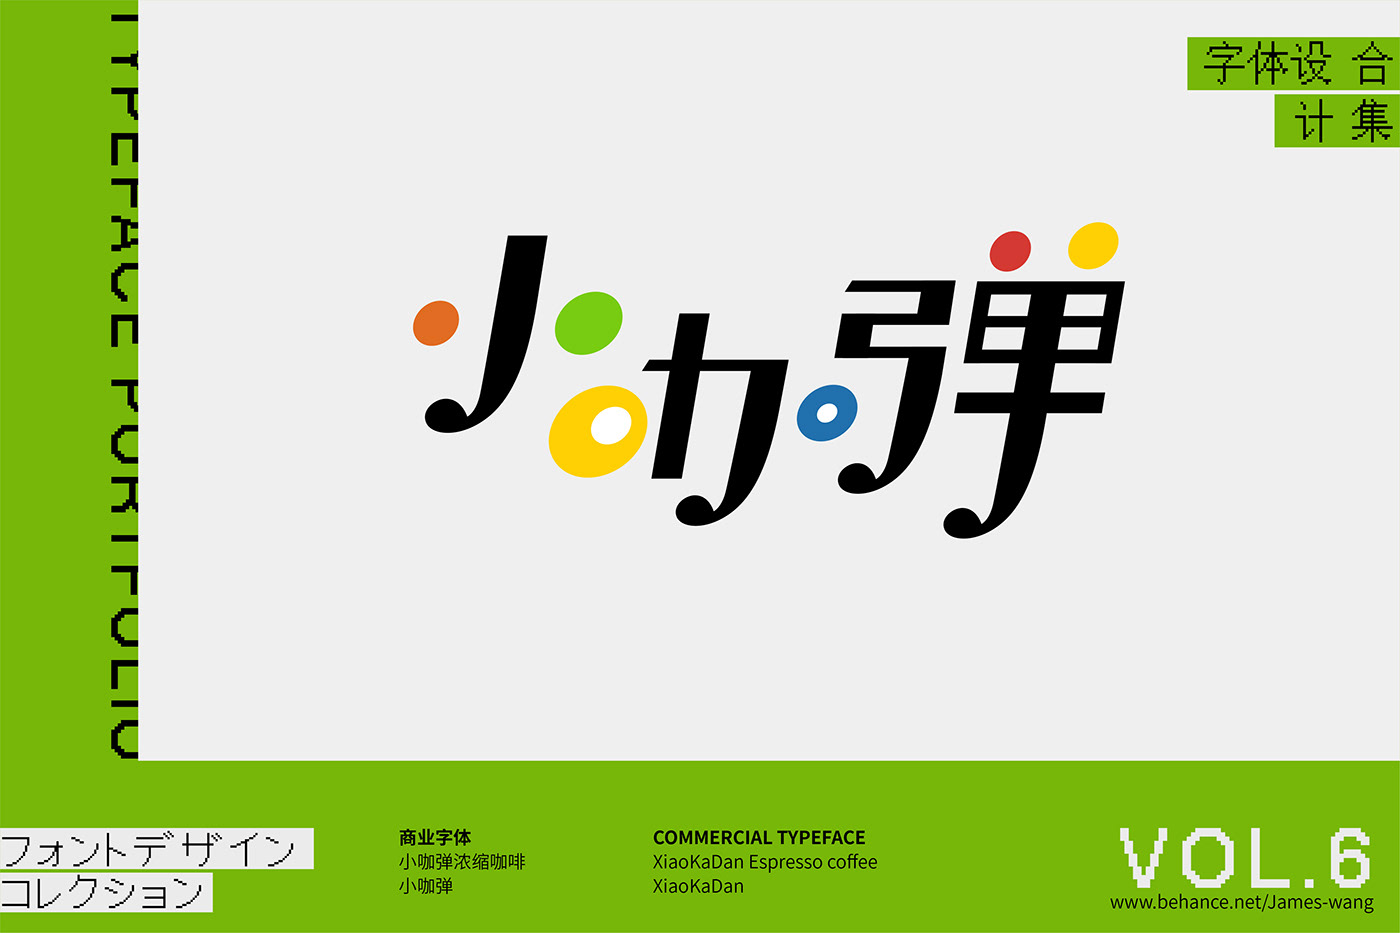 durex font font design graphic Nike Typeface 图形 字体 字体设计 汉字